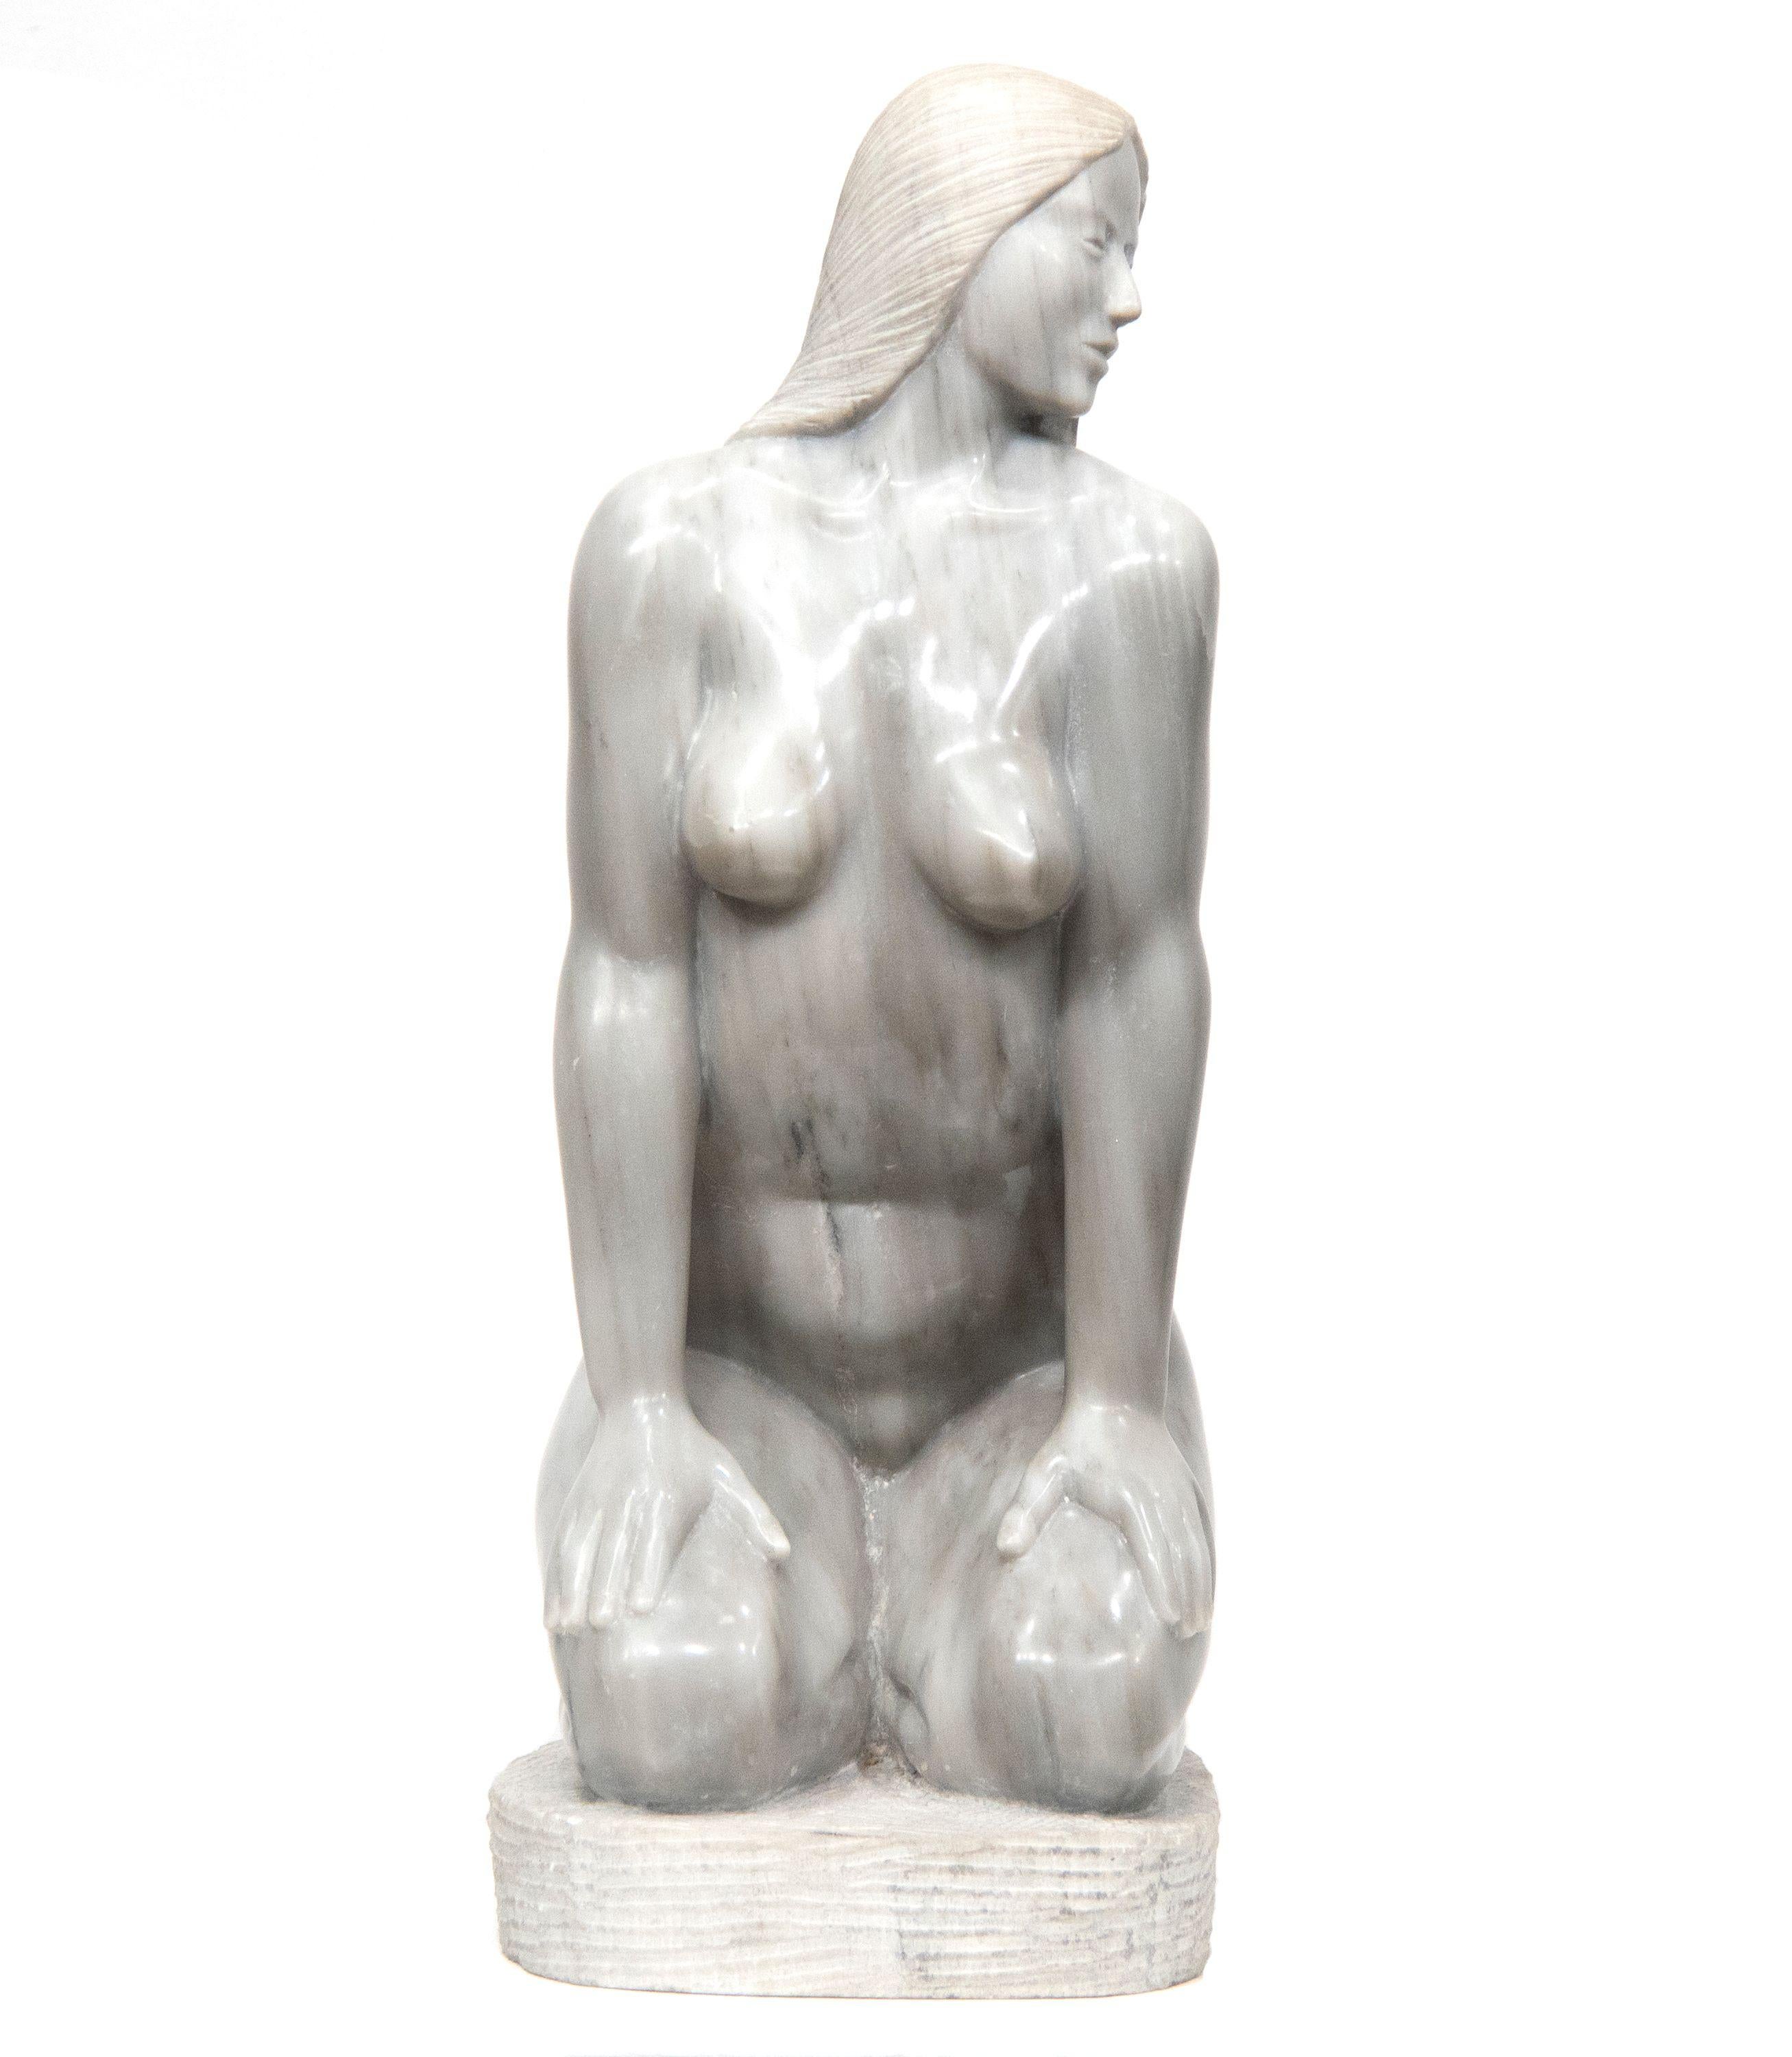 Mujer Desnuda - Sculpture by CASTANEDA, FELIPE